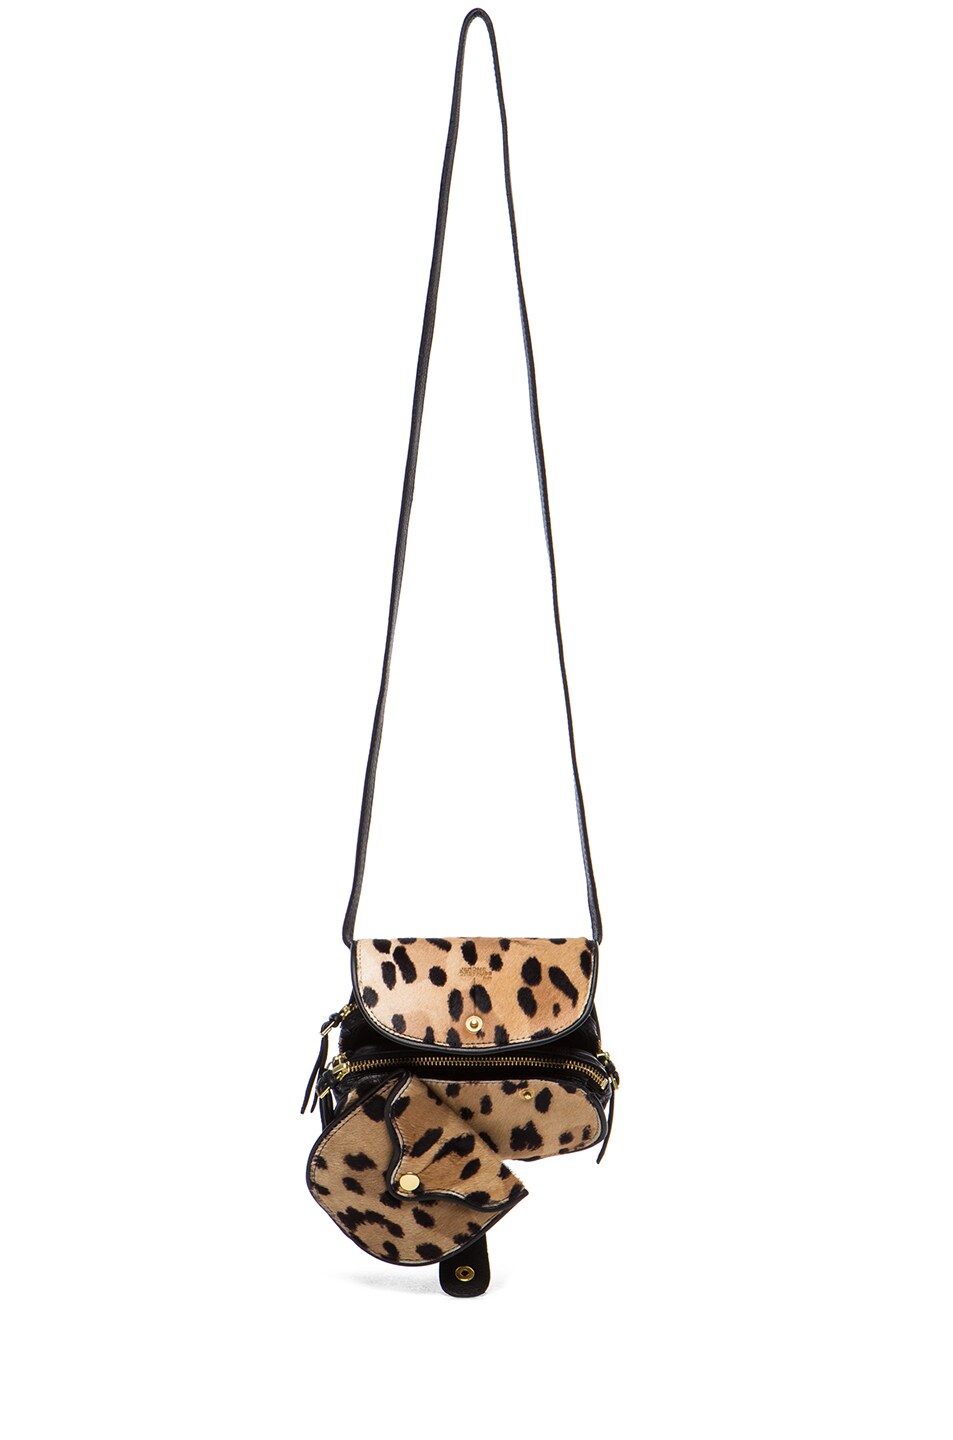 Jerome Dreyfuss Momo Mini Messenger Bag in Leopard | FWRD